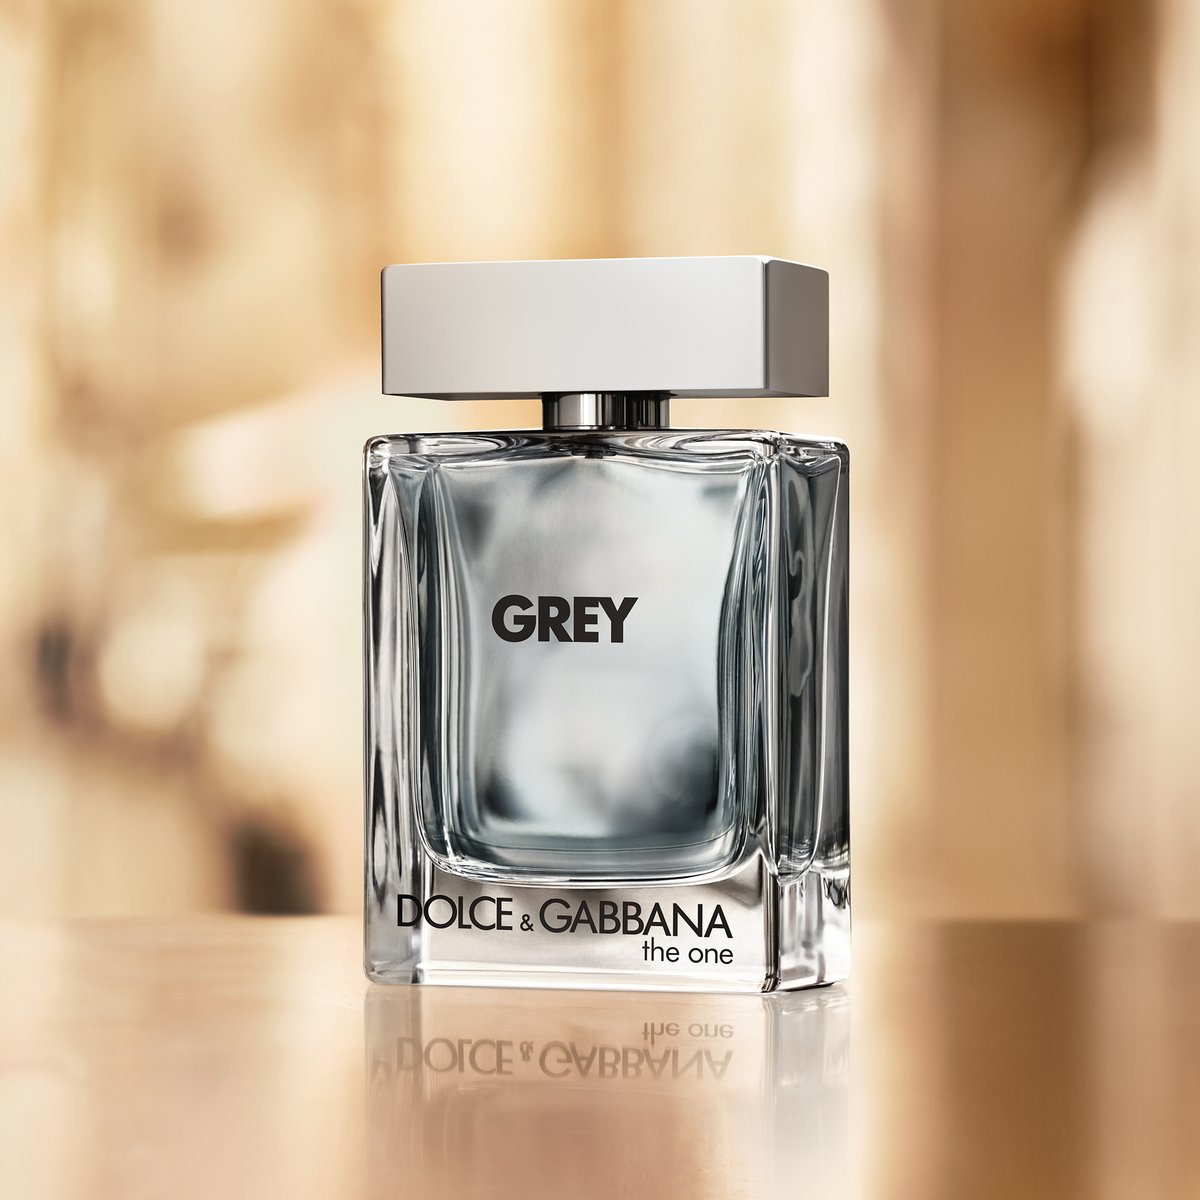 dolce gabbana parfum grey